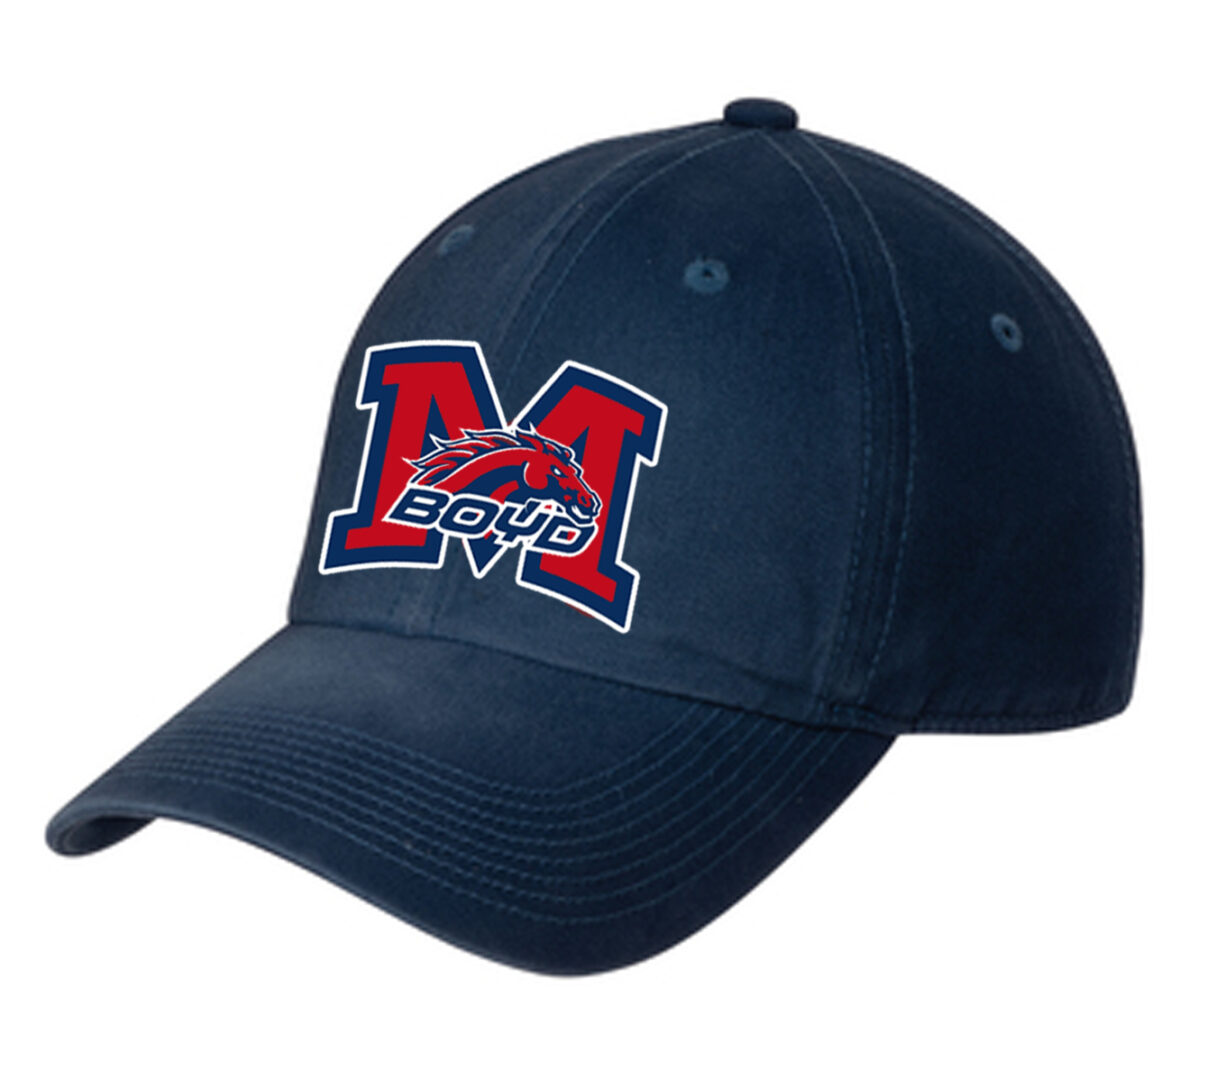 A navy-blue bull cap with Boyd logo